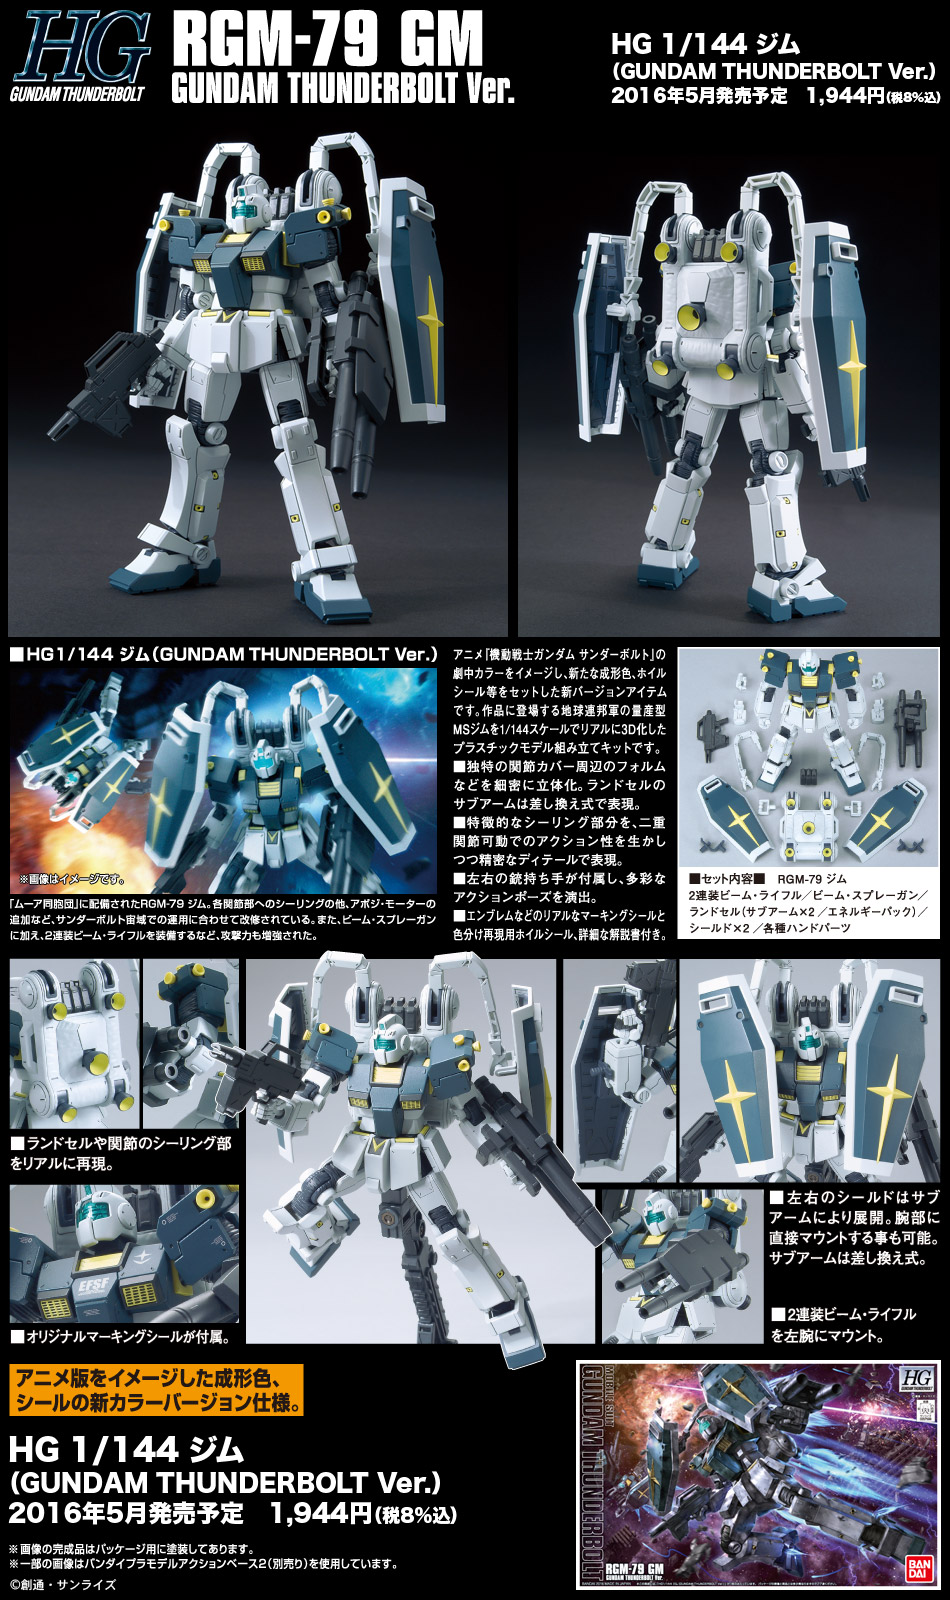 Hg 1 144 ジム Gundam Thunderbolt Ver バンダイ ホビーサイト